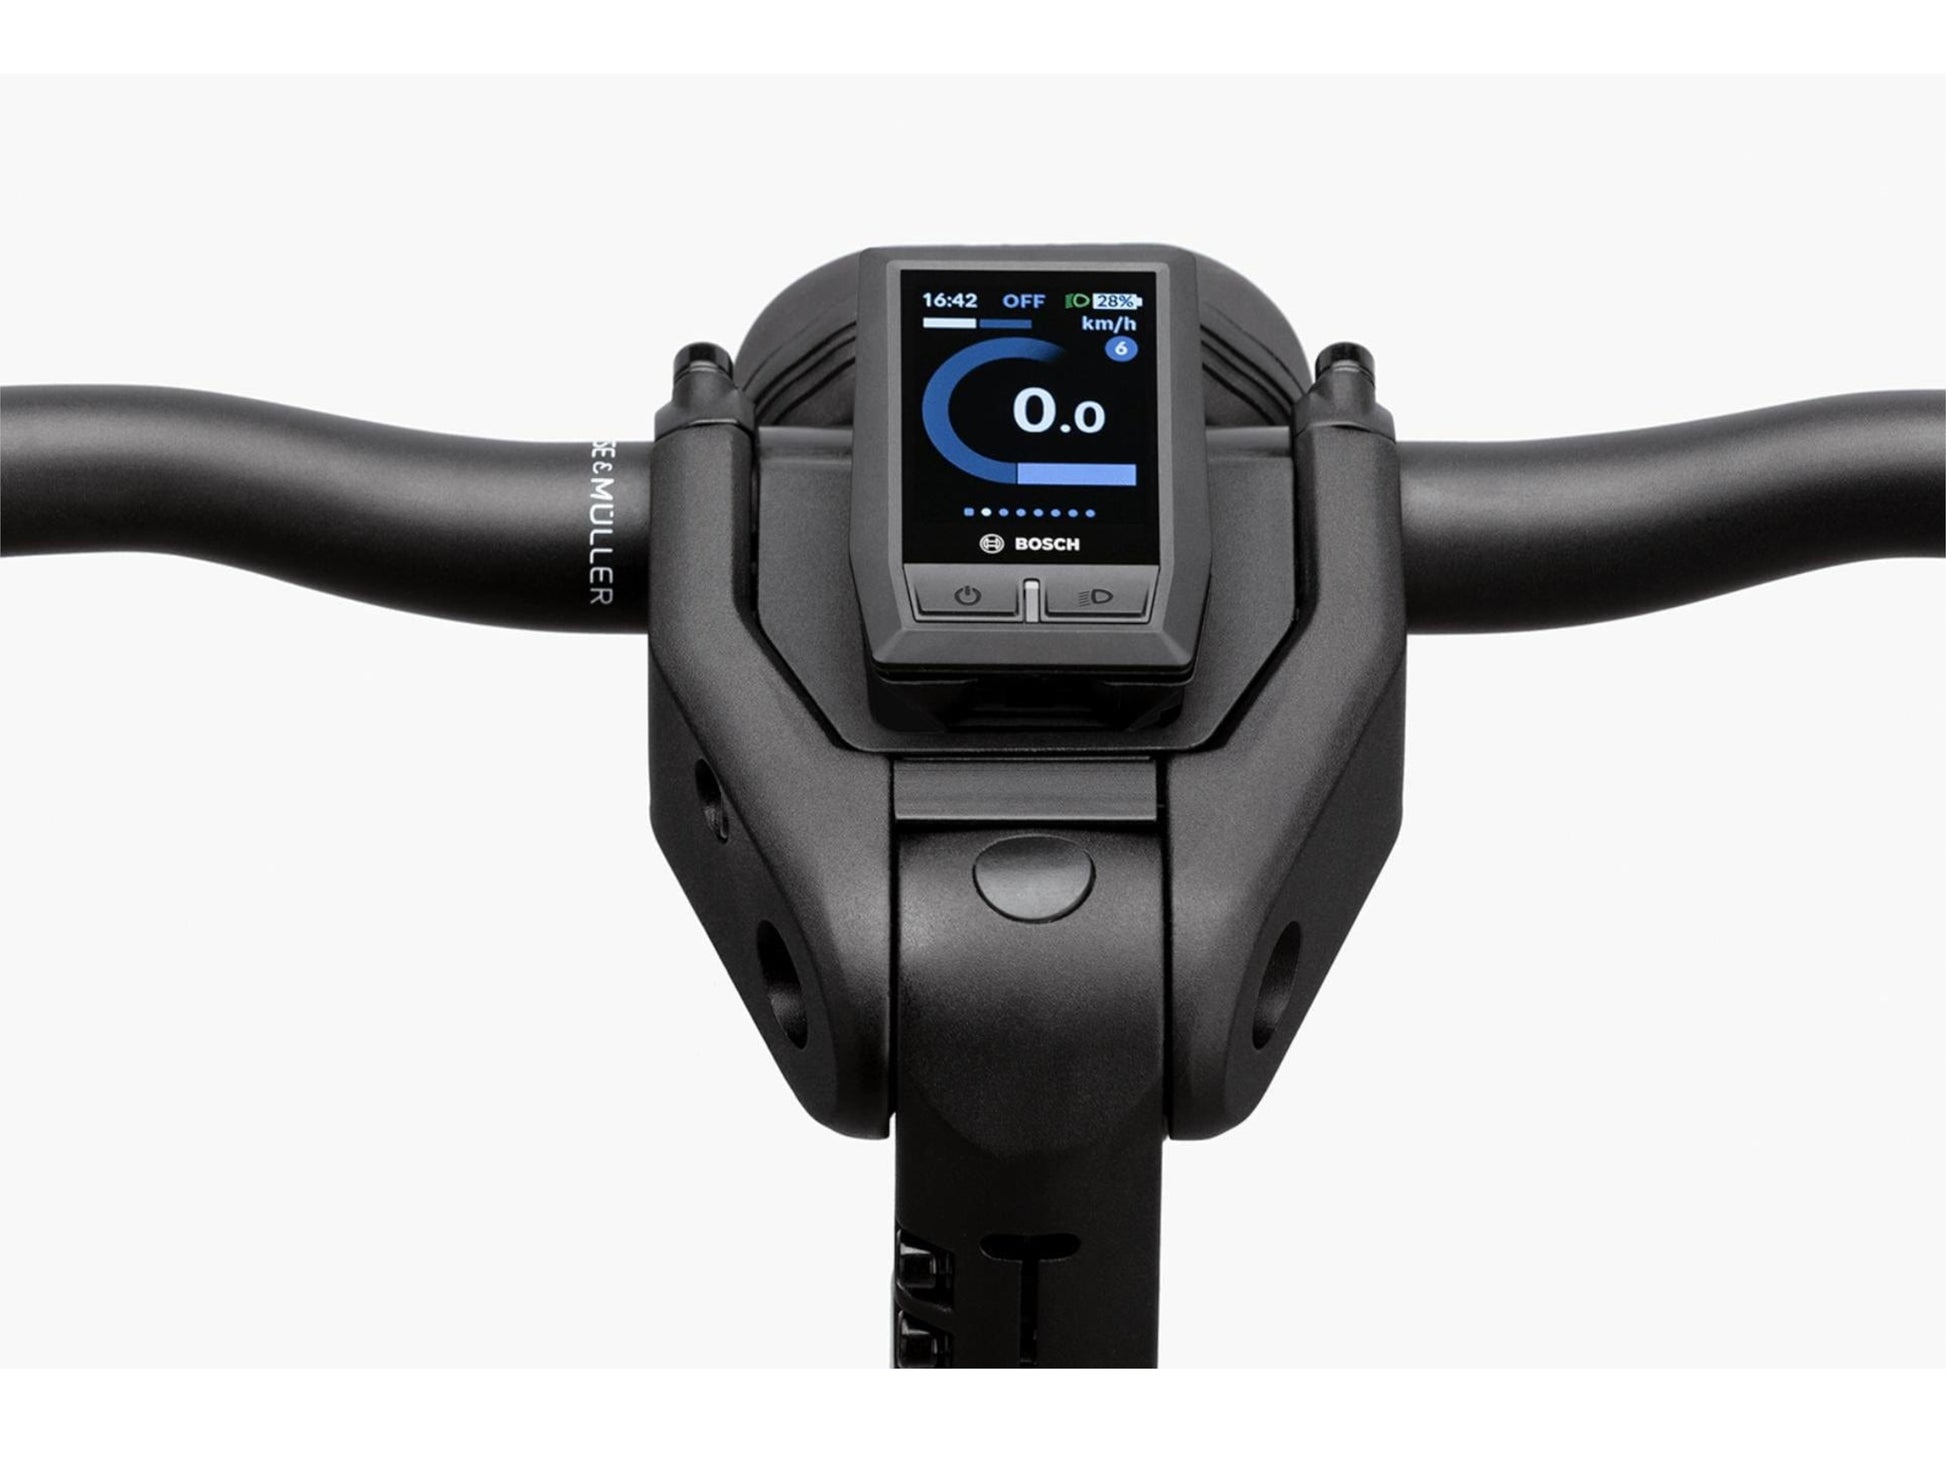 New Bosch Kiox 500 Display for the smart system - Bike Shop Girl